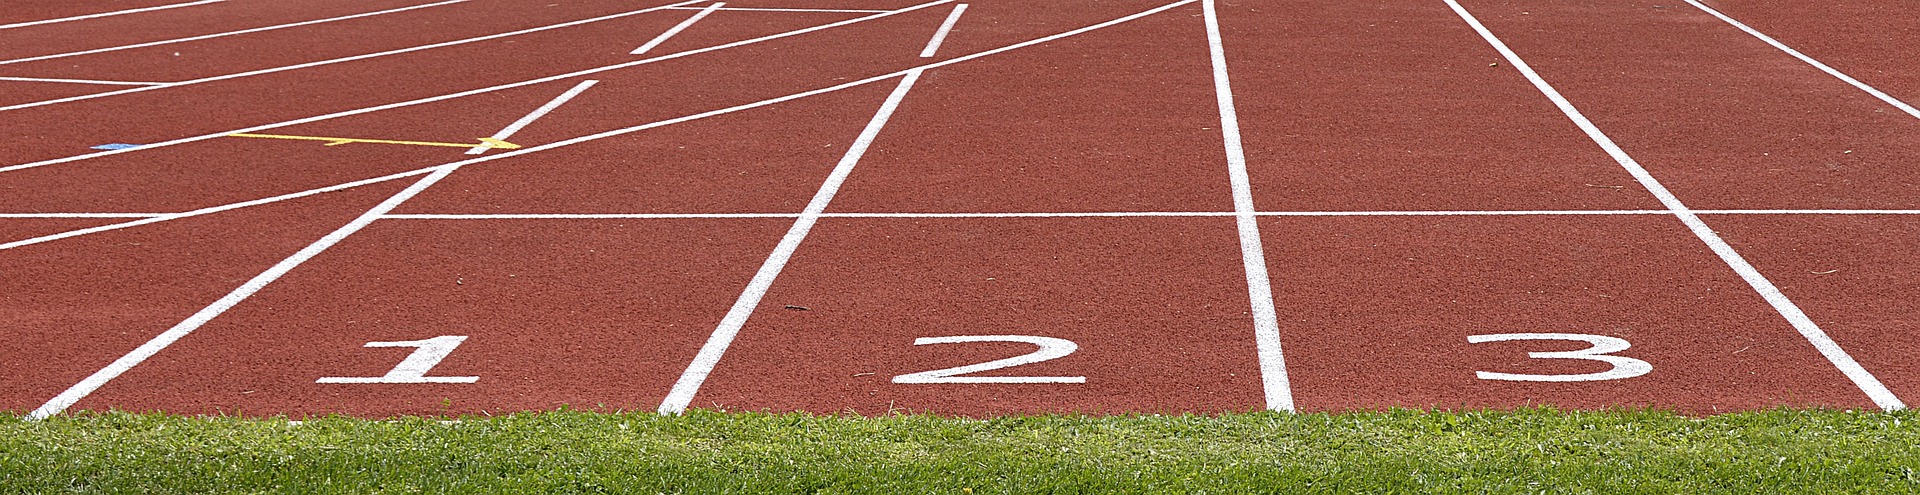 sport track